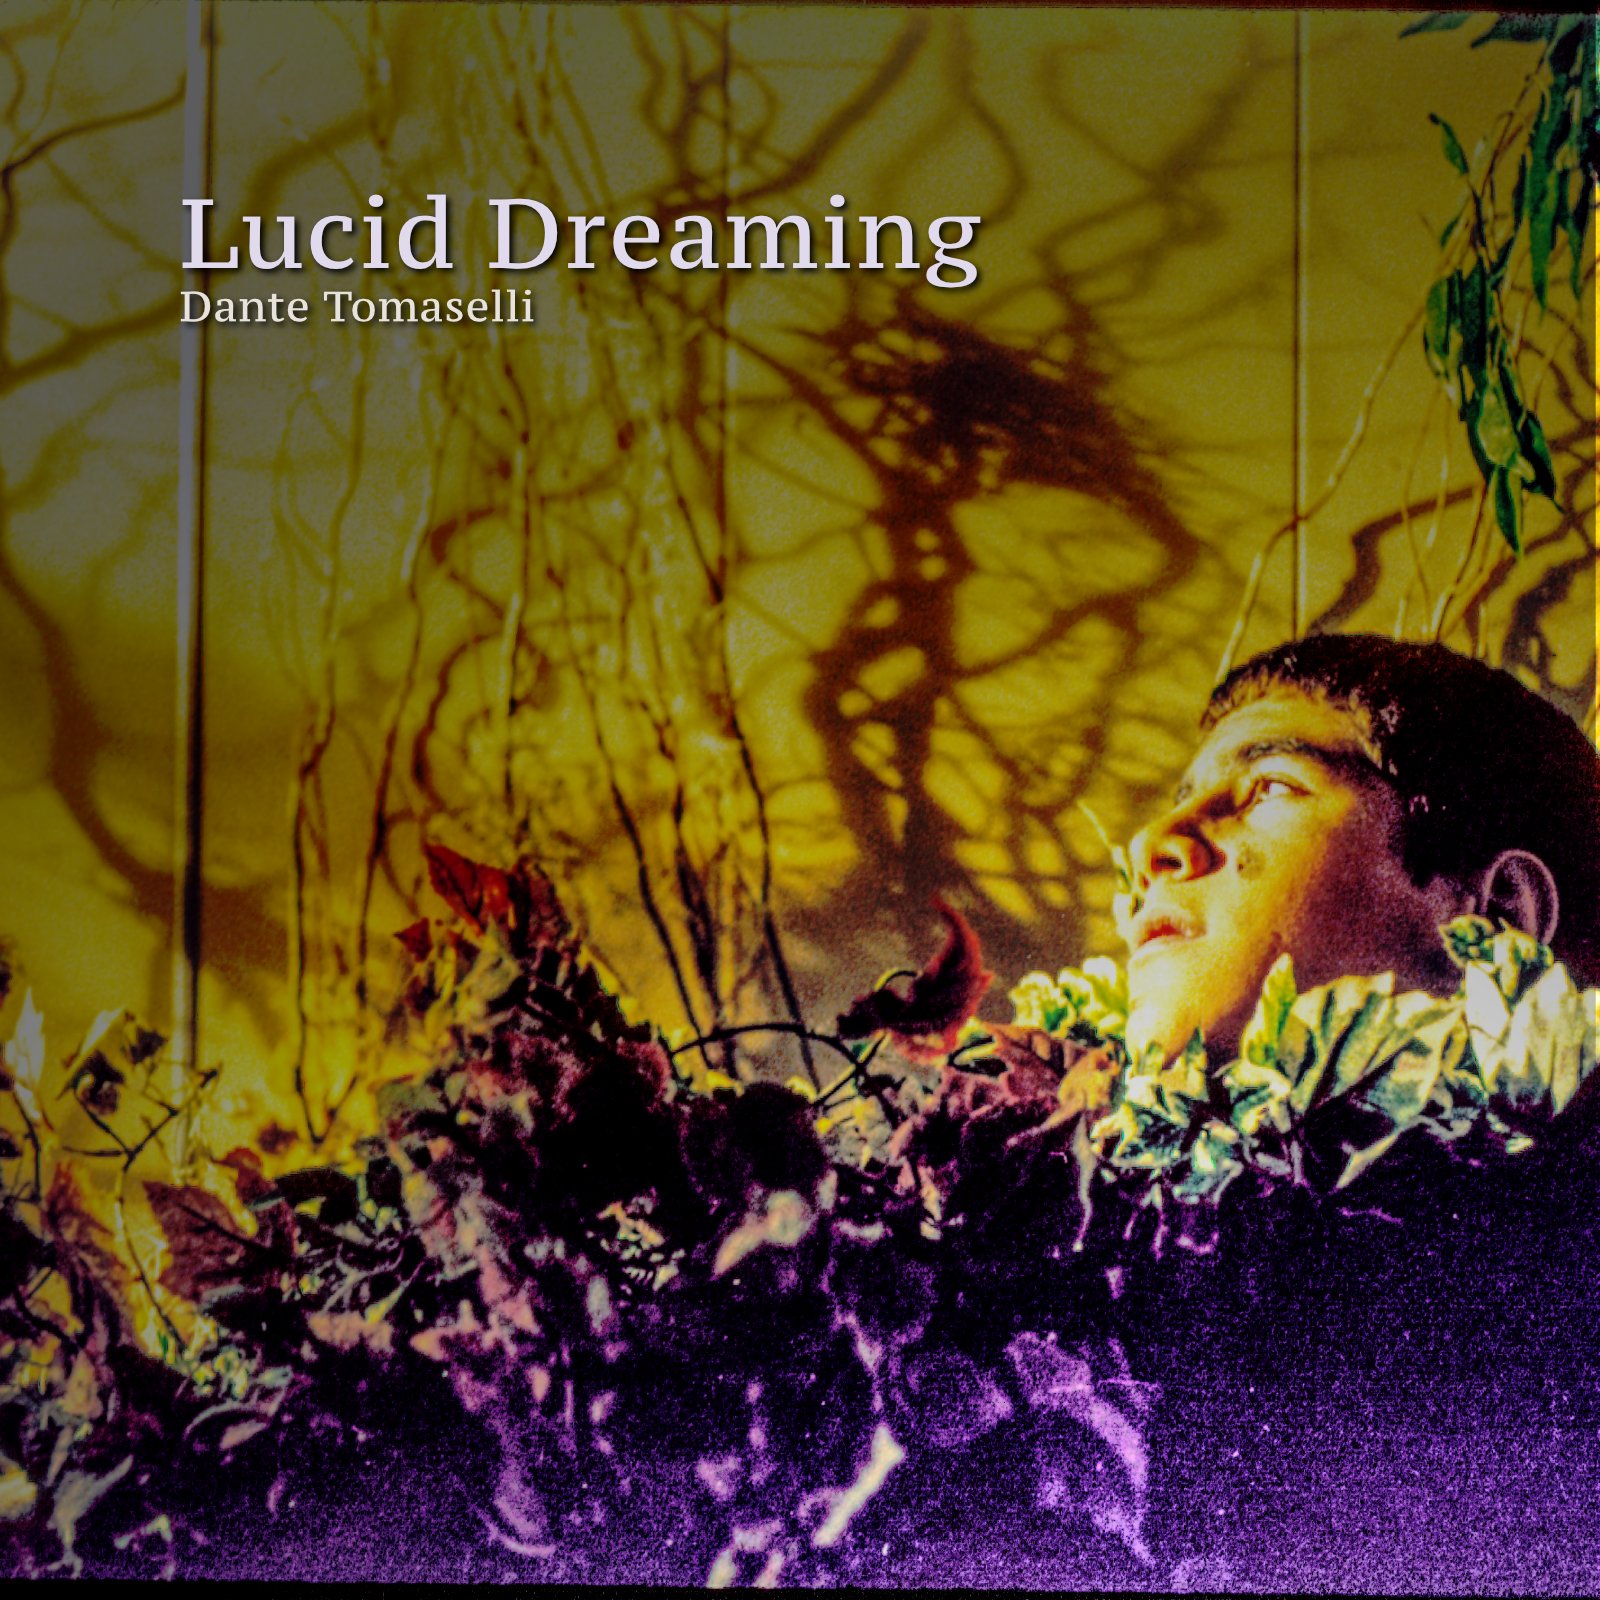 Dreaming single. Данте Дрим. Lucid Dreams альбом.